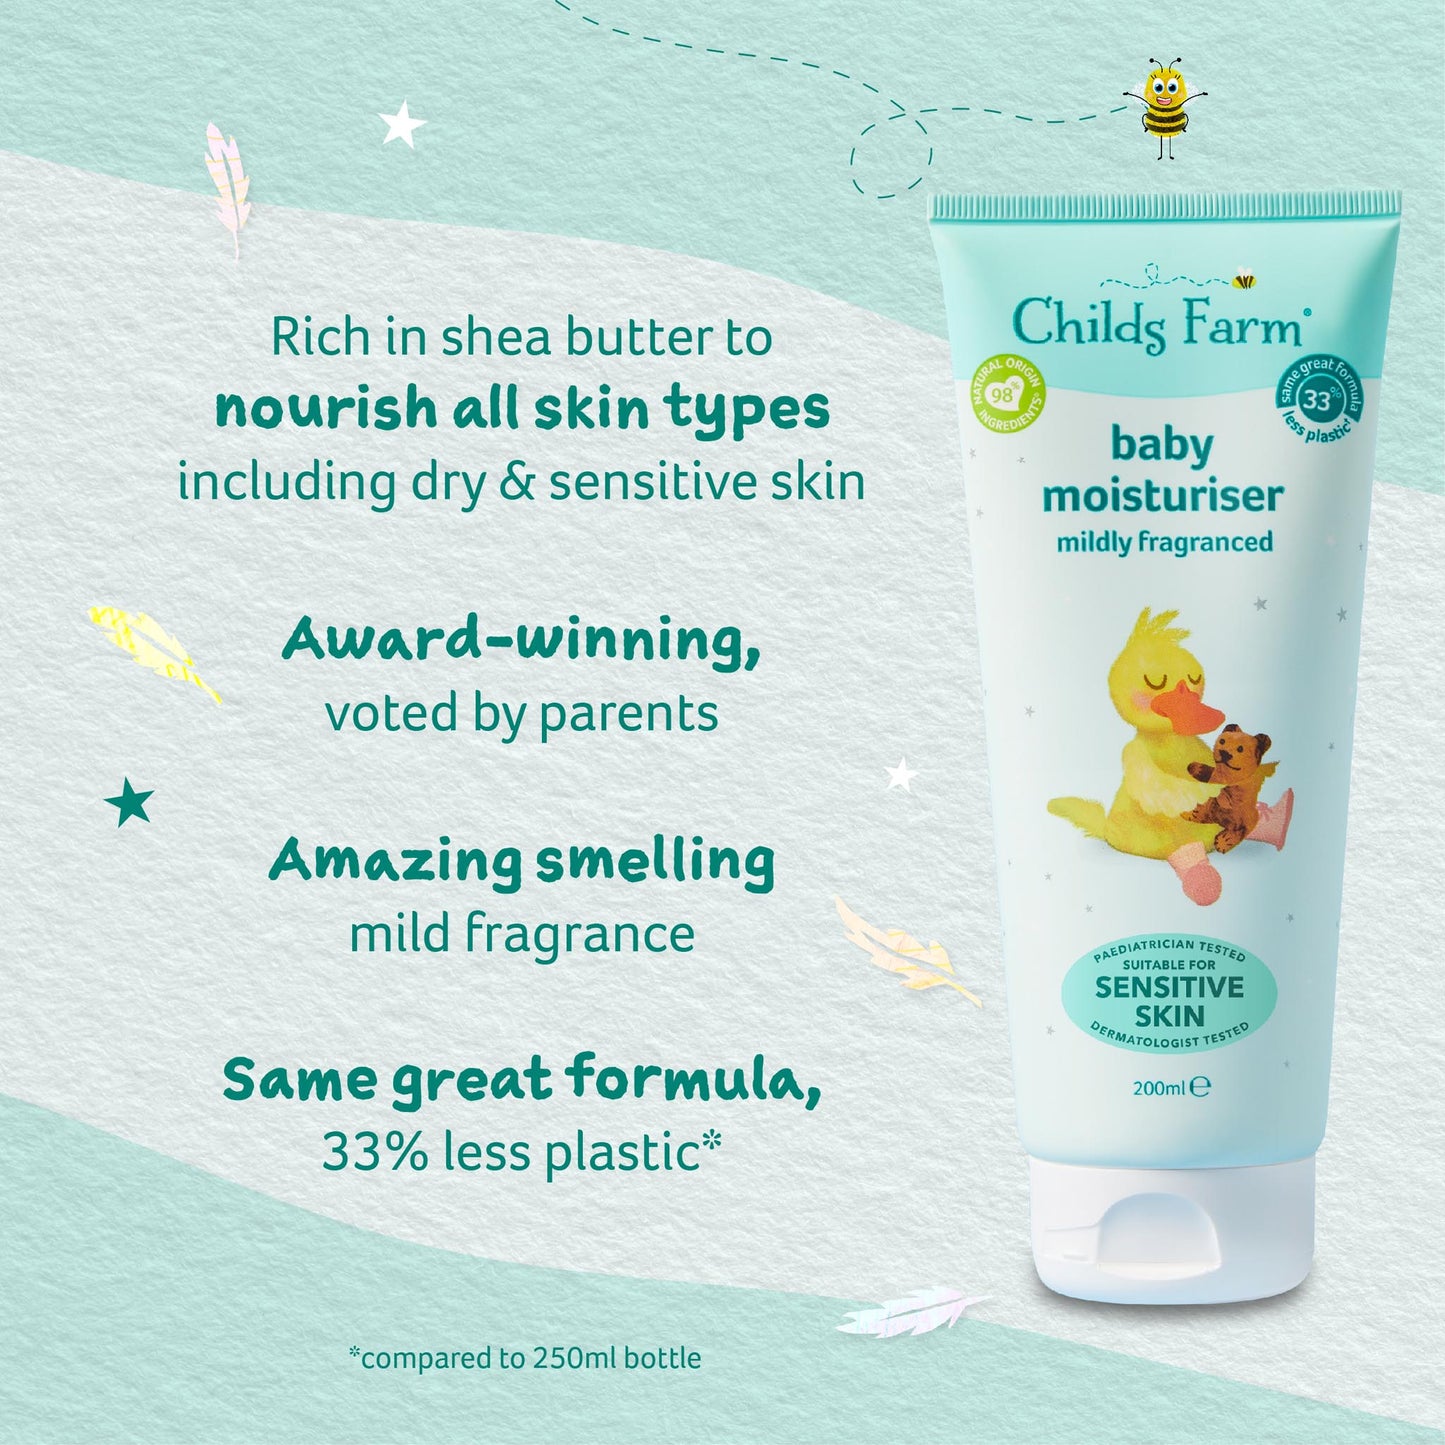 [STAFF] Childs Farm baby moisturiser mildly fragranced